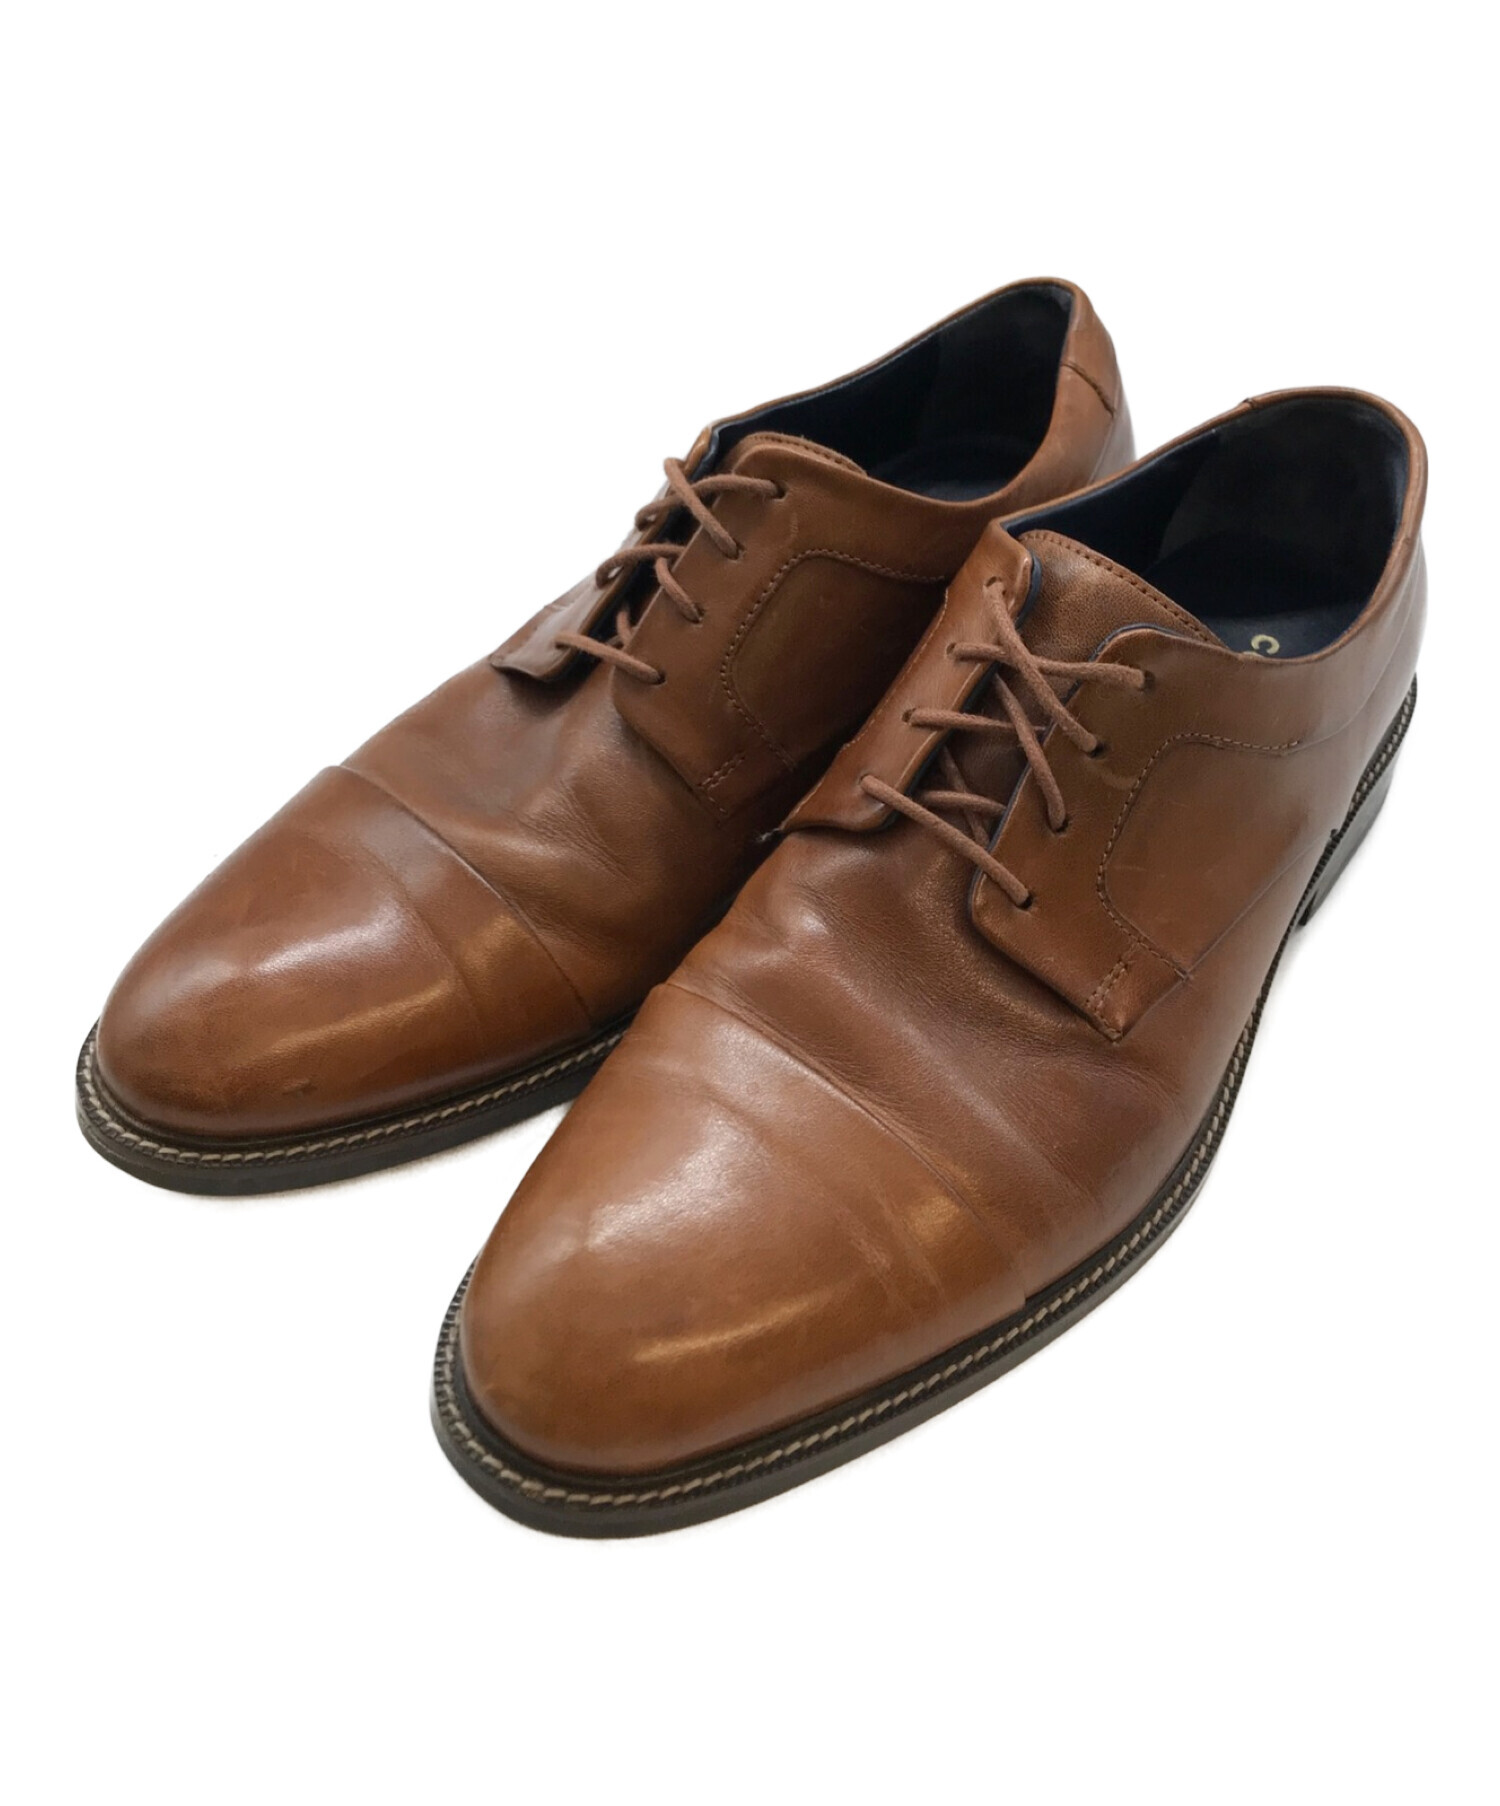 COLEHAAN 革靴 ビジネスシューズ ブラウン 27.5cm - 靴